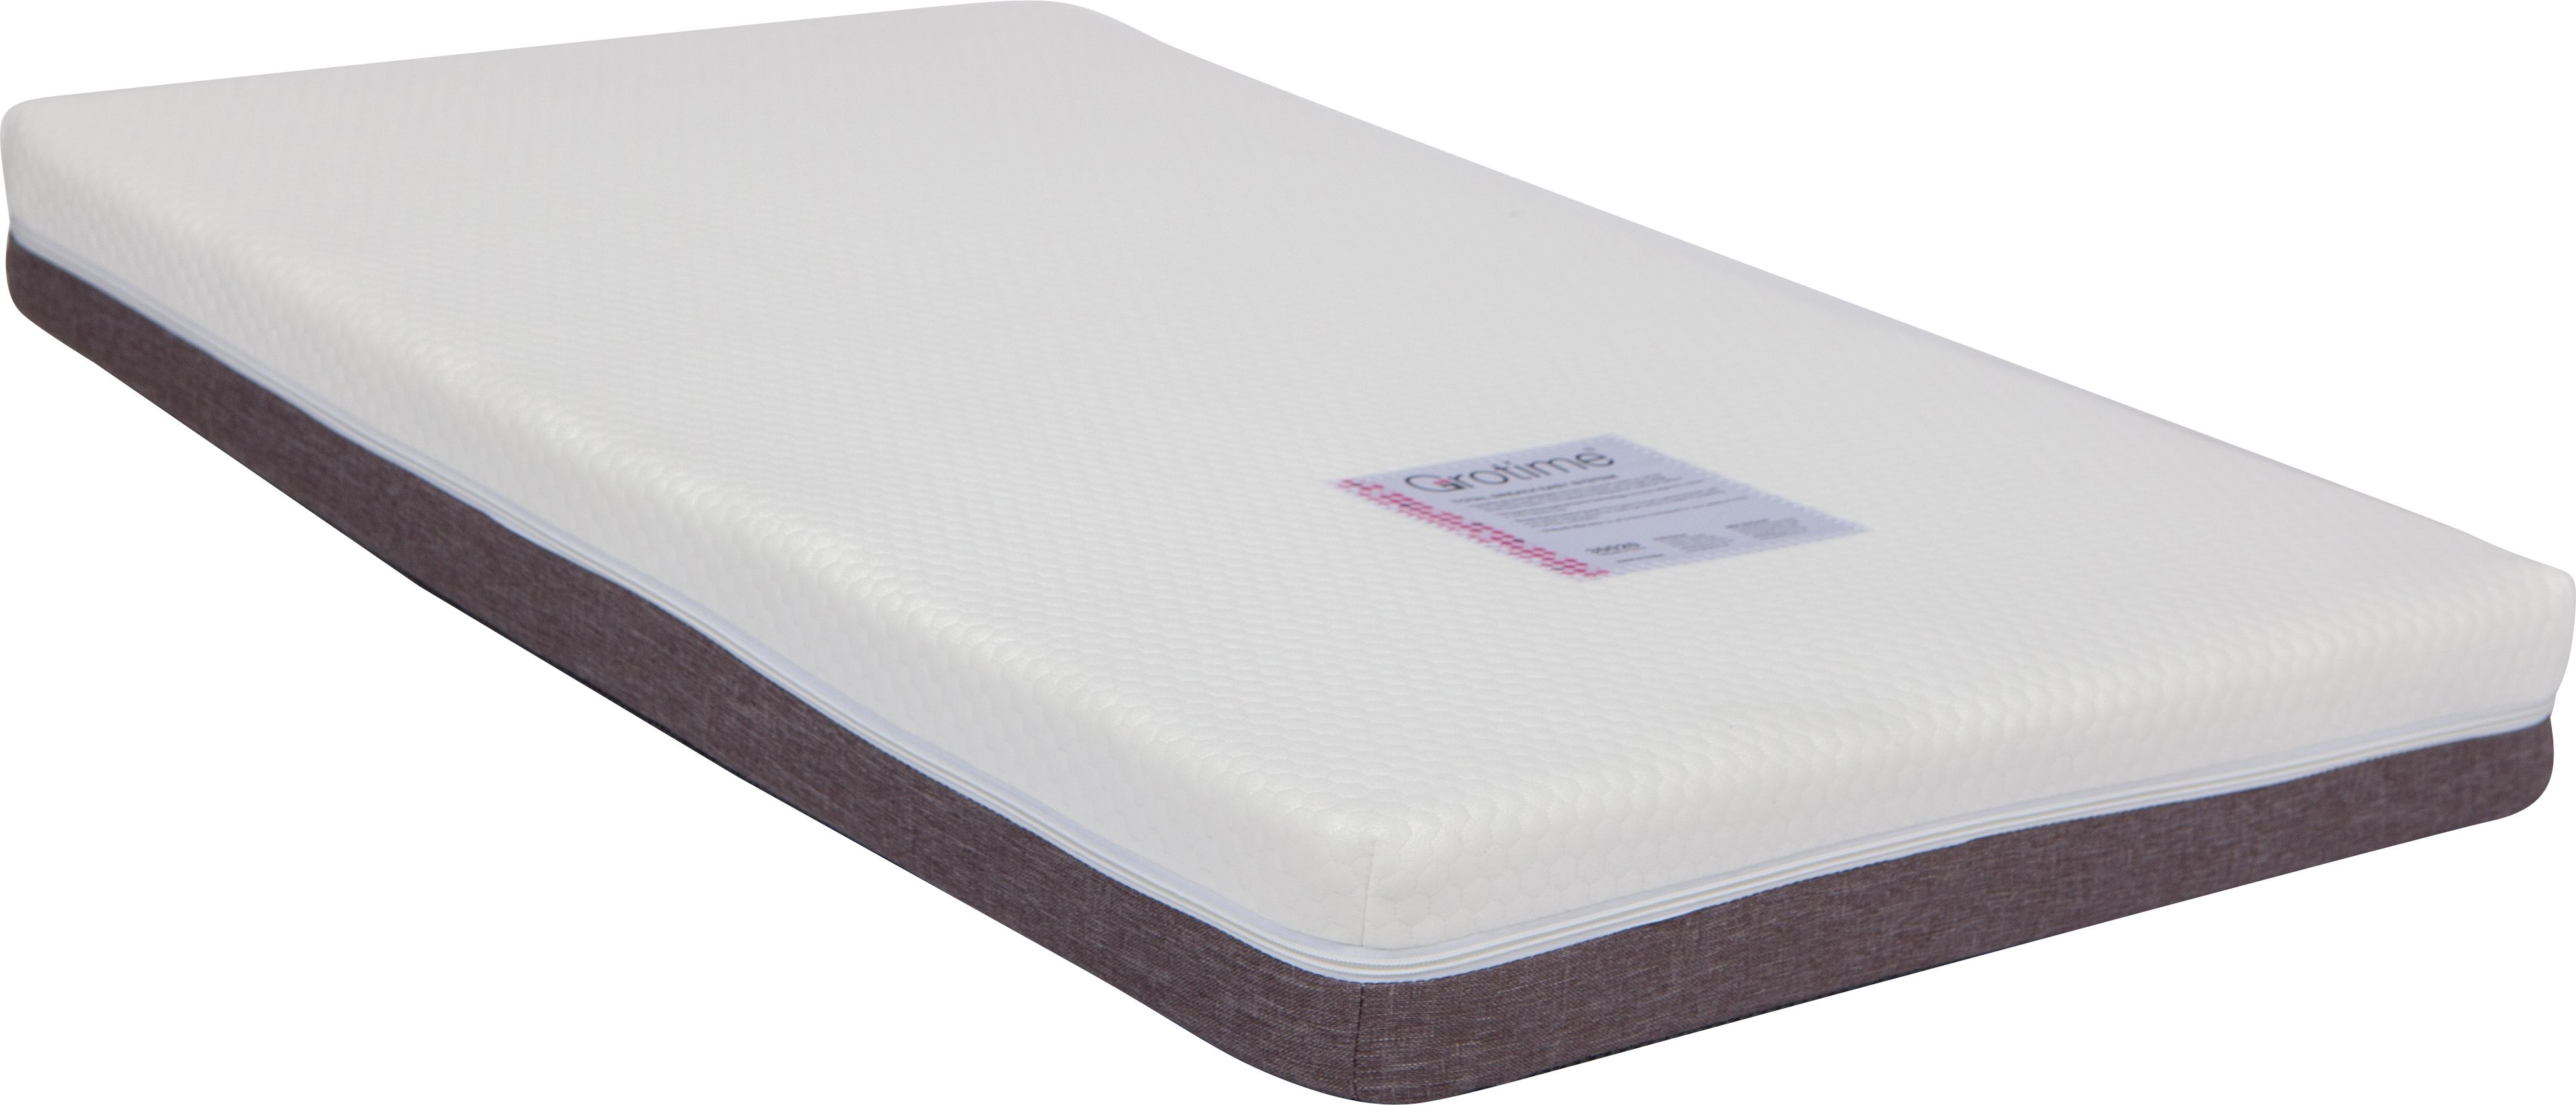 grotime backsaver mattress protector